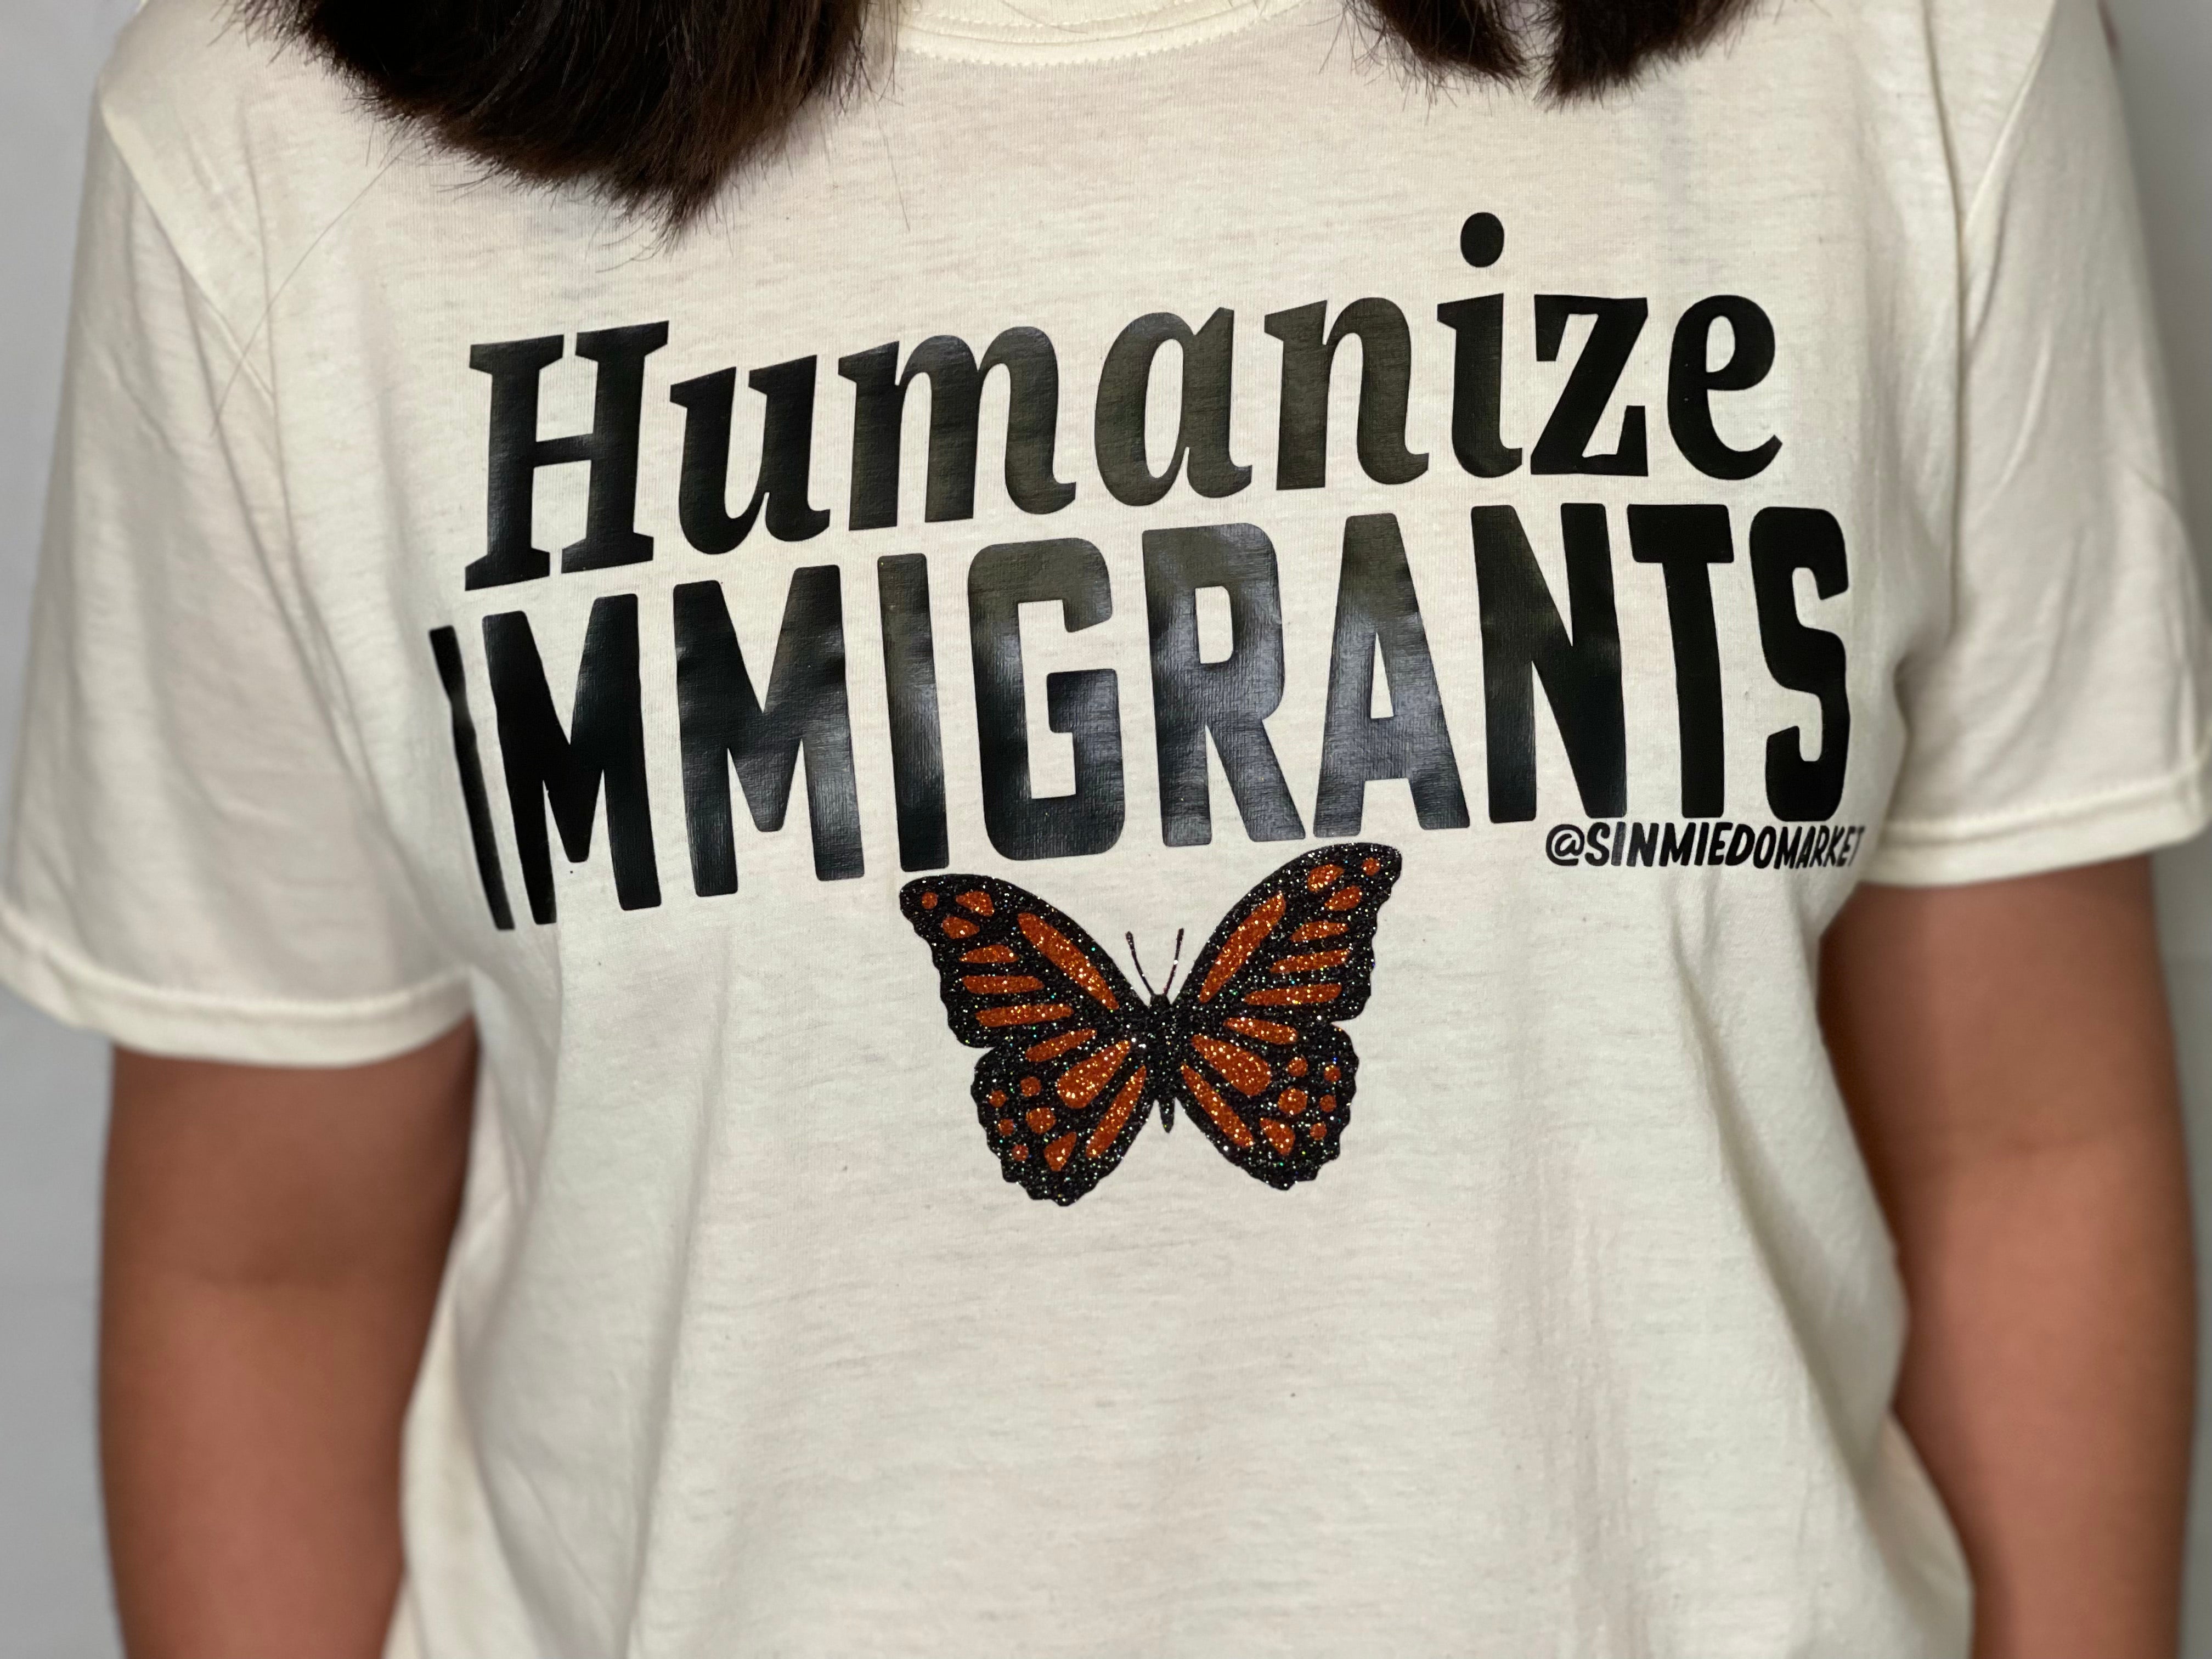 Humanize Immigrants T-Shirt